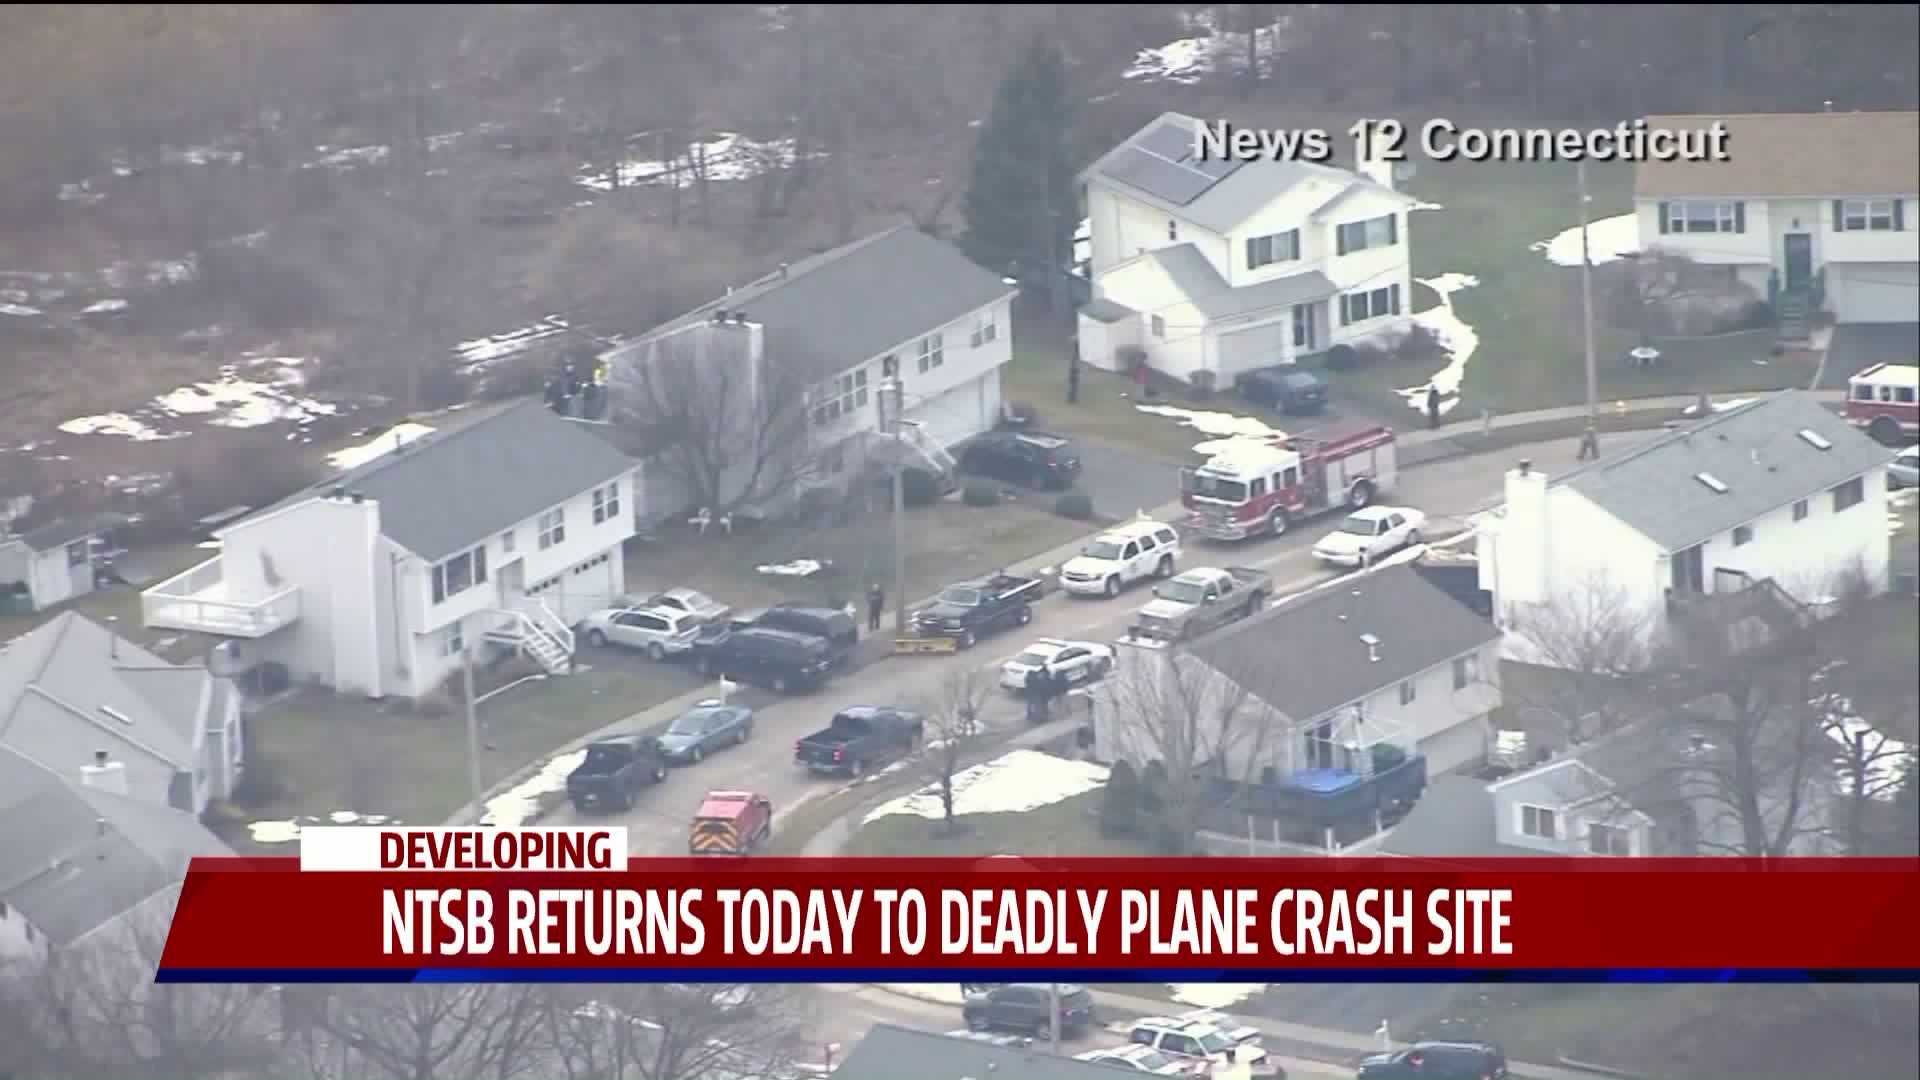 Investigation into plane crash continues